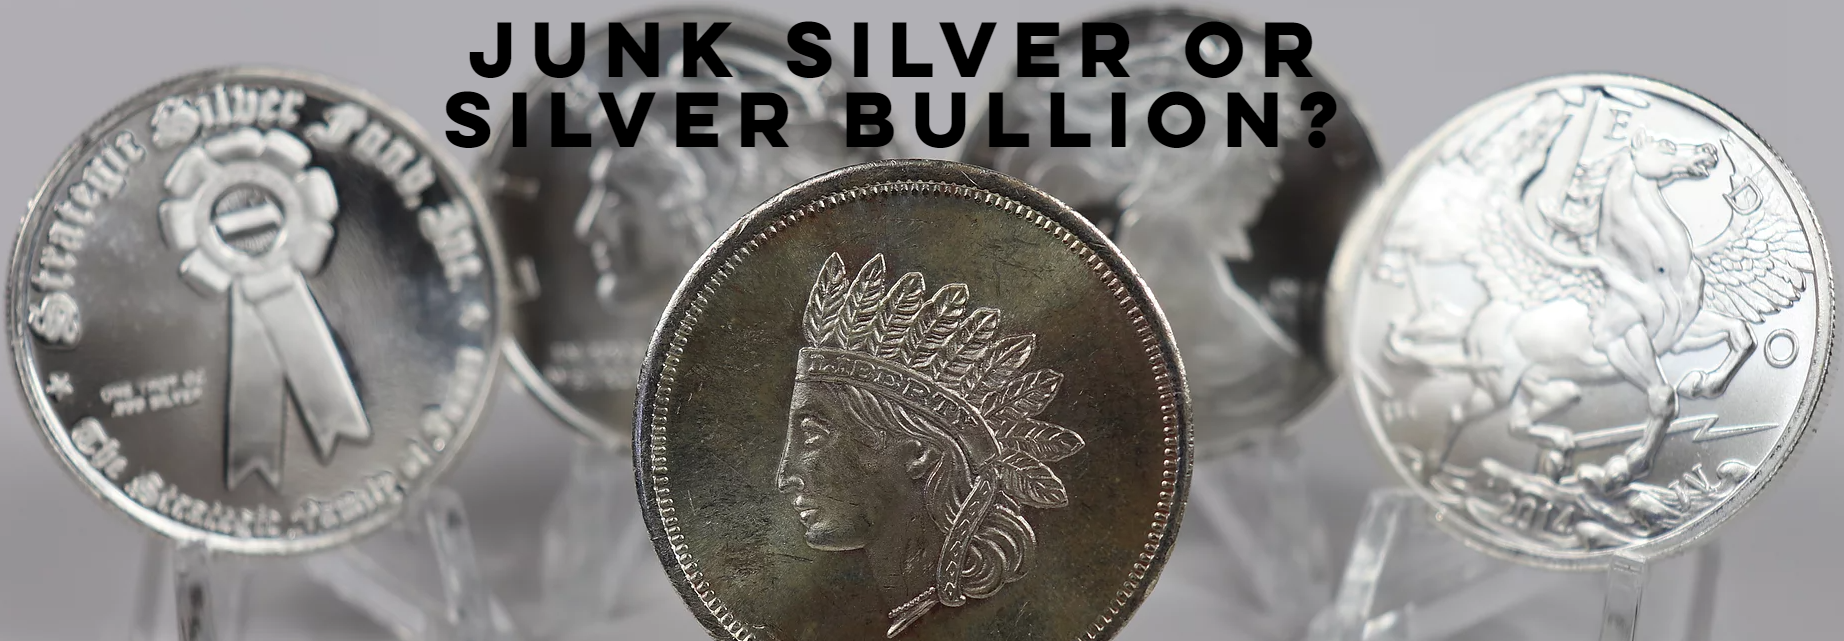 Junk Silver or Silver Bullion?